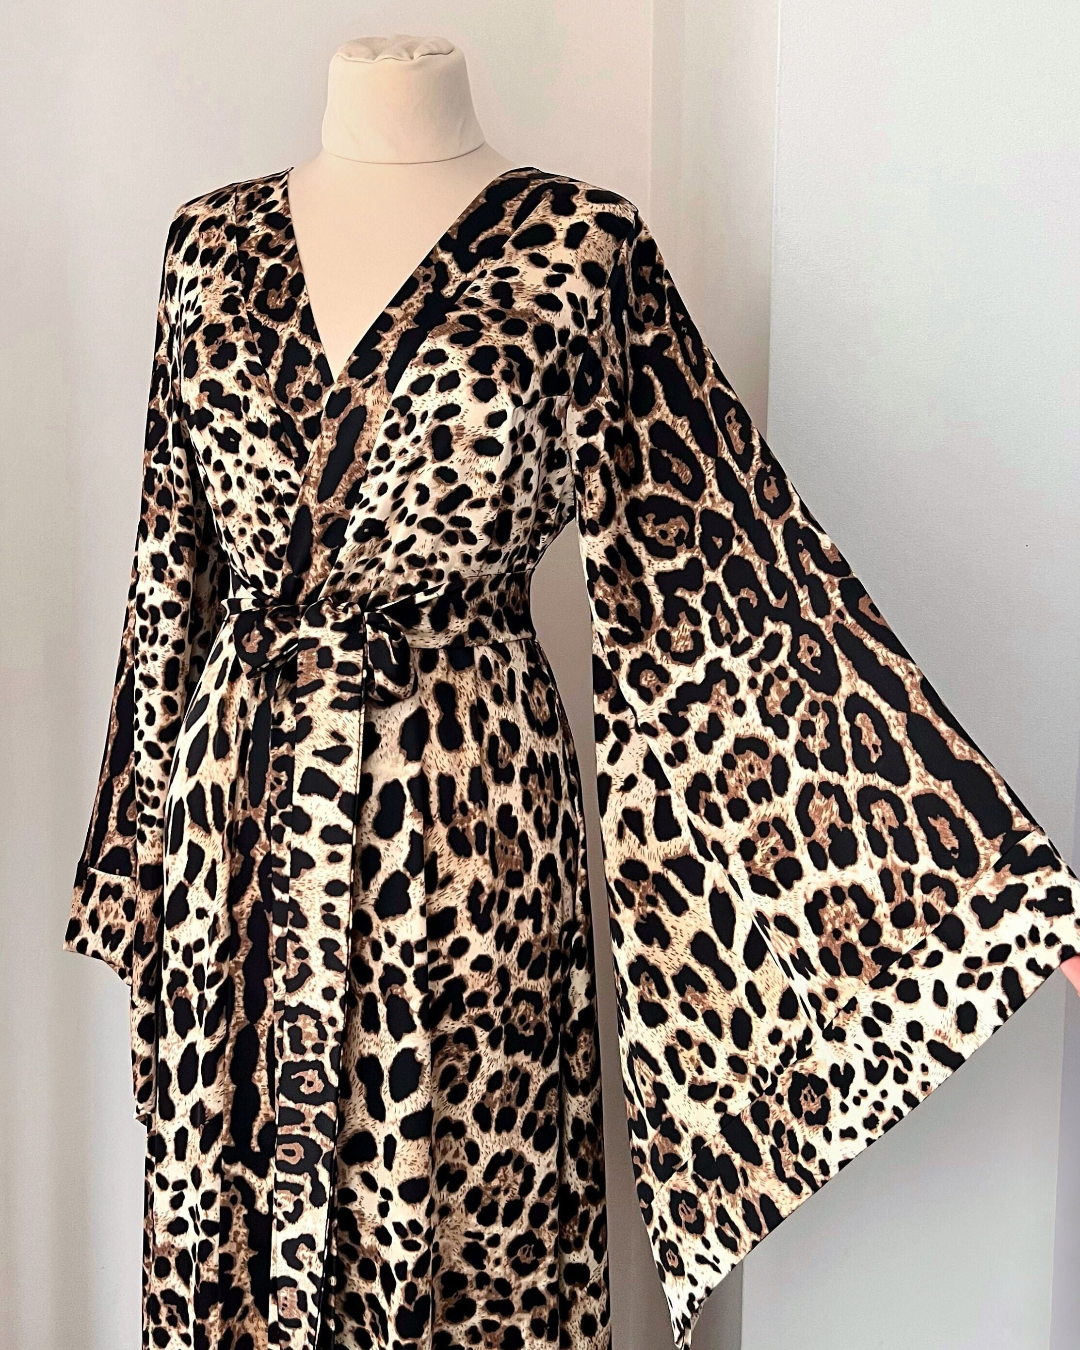 a leopard print dress on a mannequin